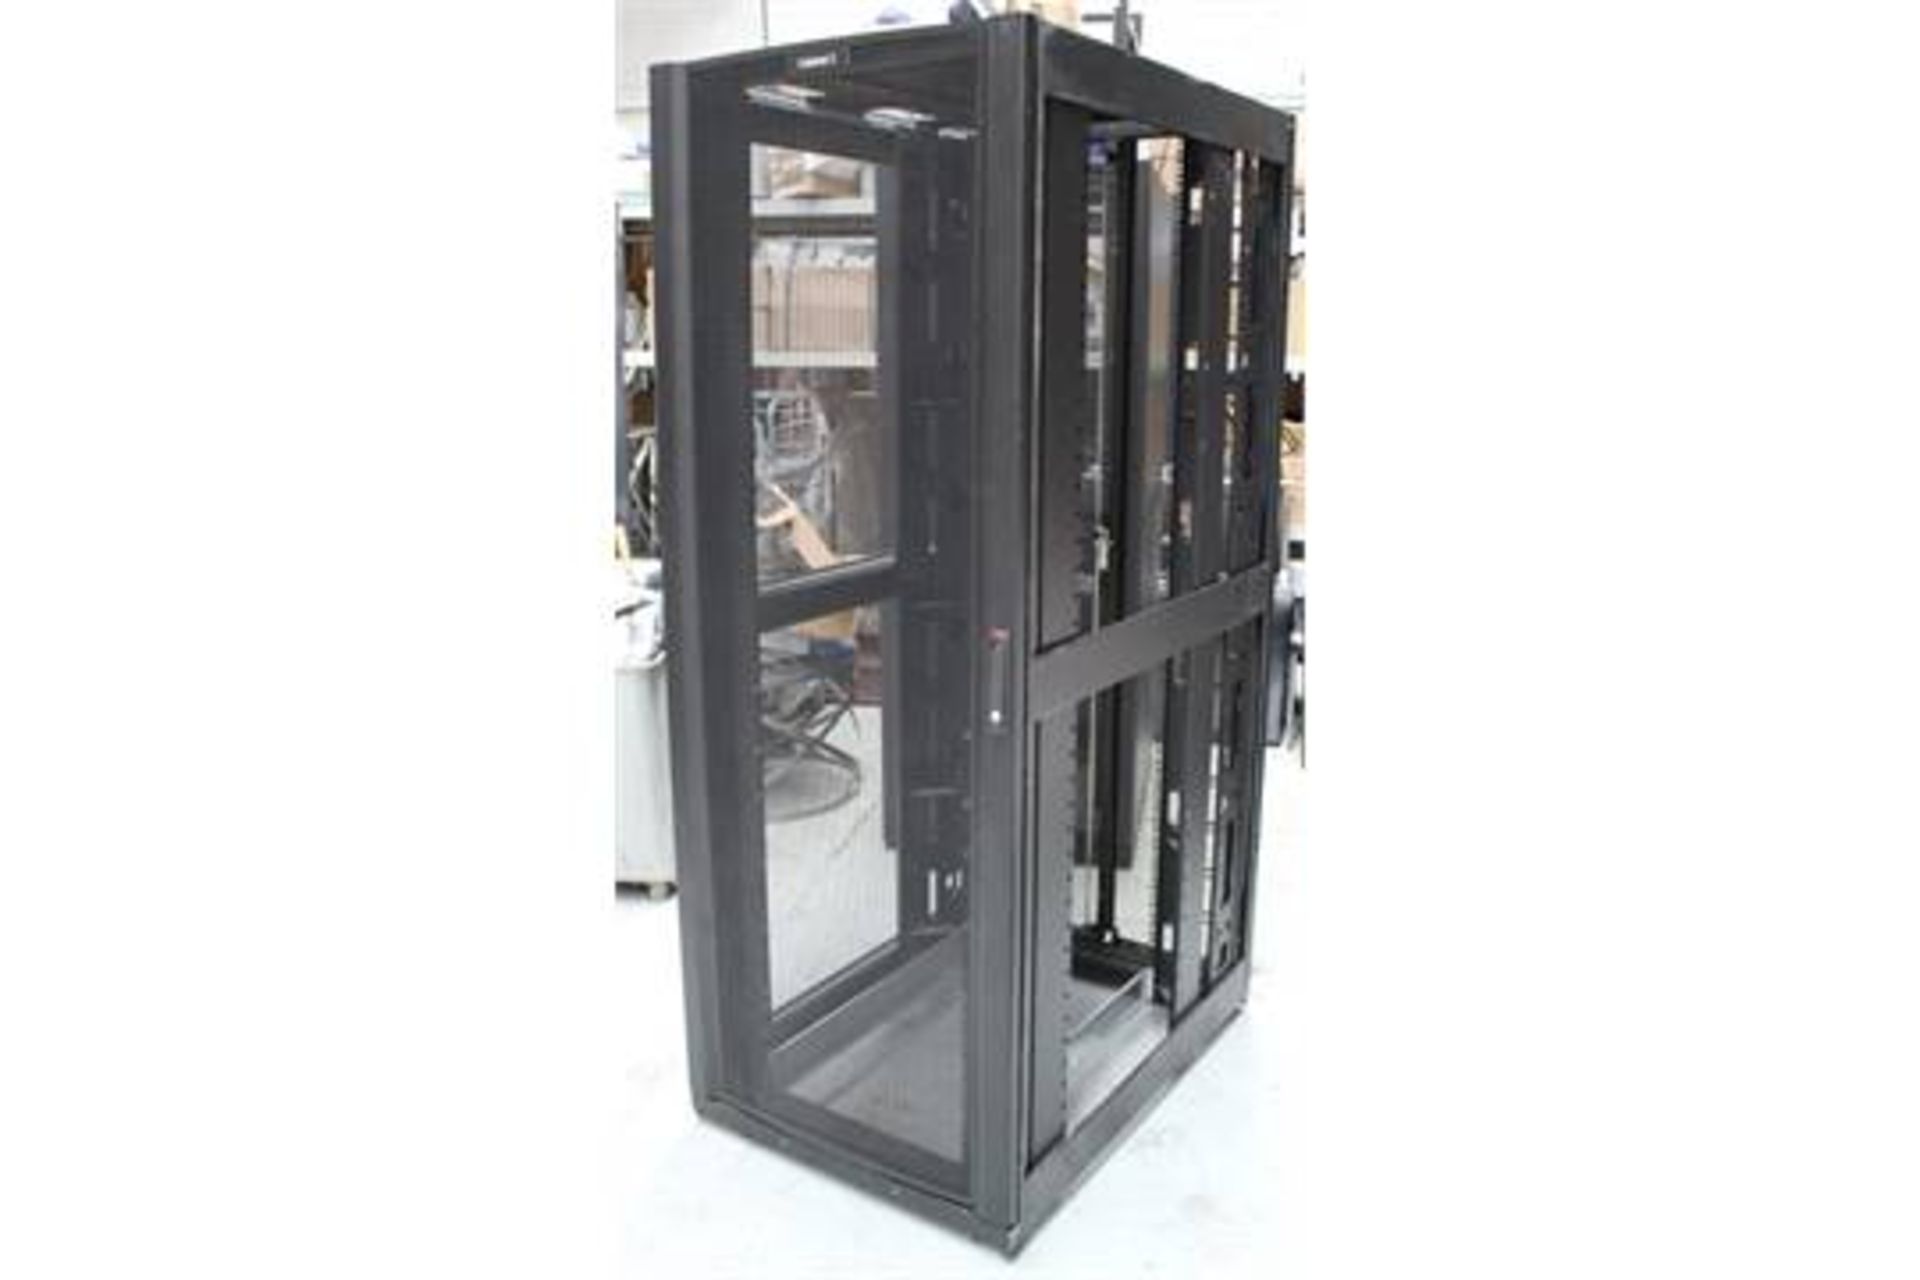 1 x APC Netshelter 42U Server Enclosure - AR3100 Black - Suitable For 19 Inch Compliant Equipment -